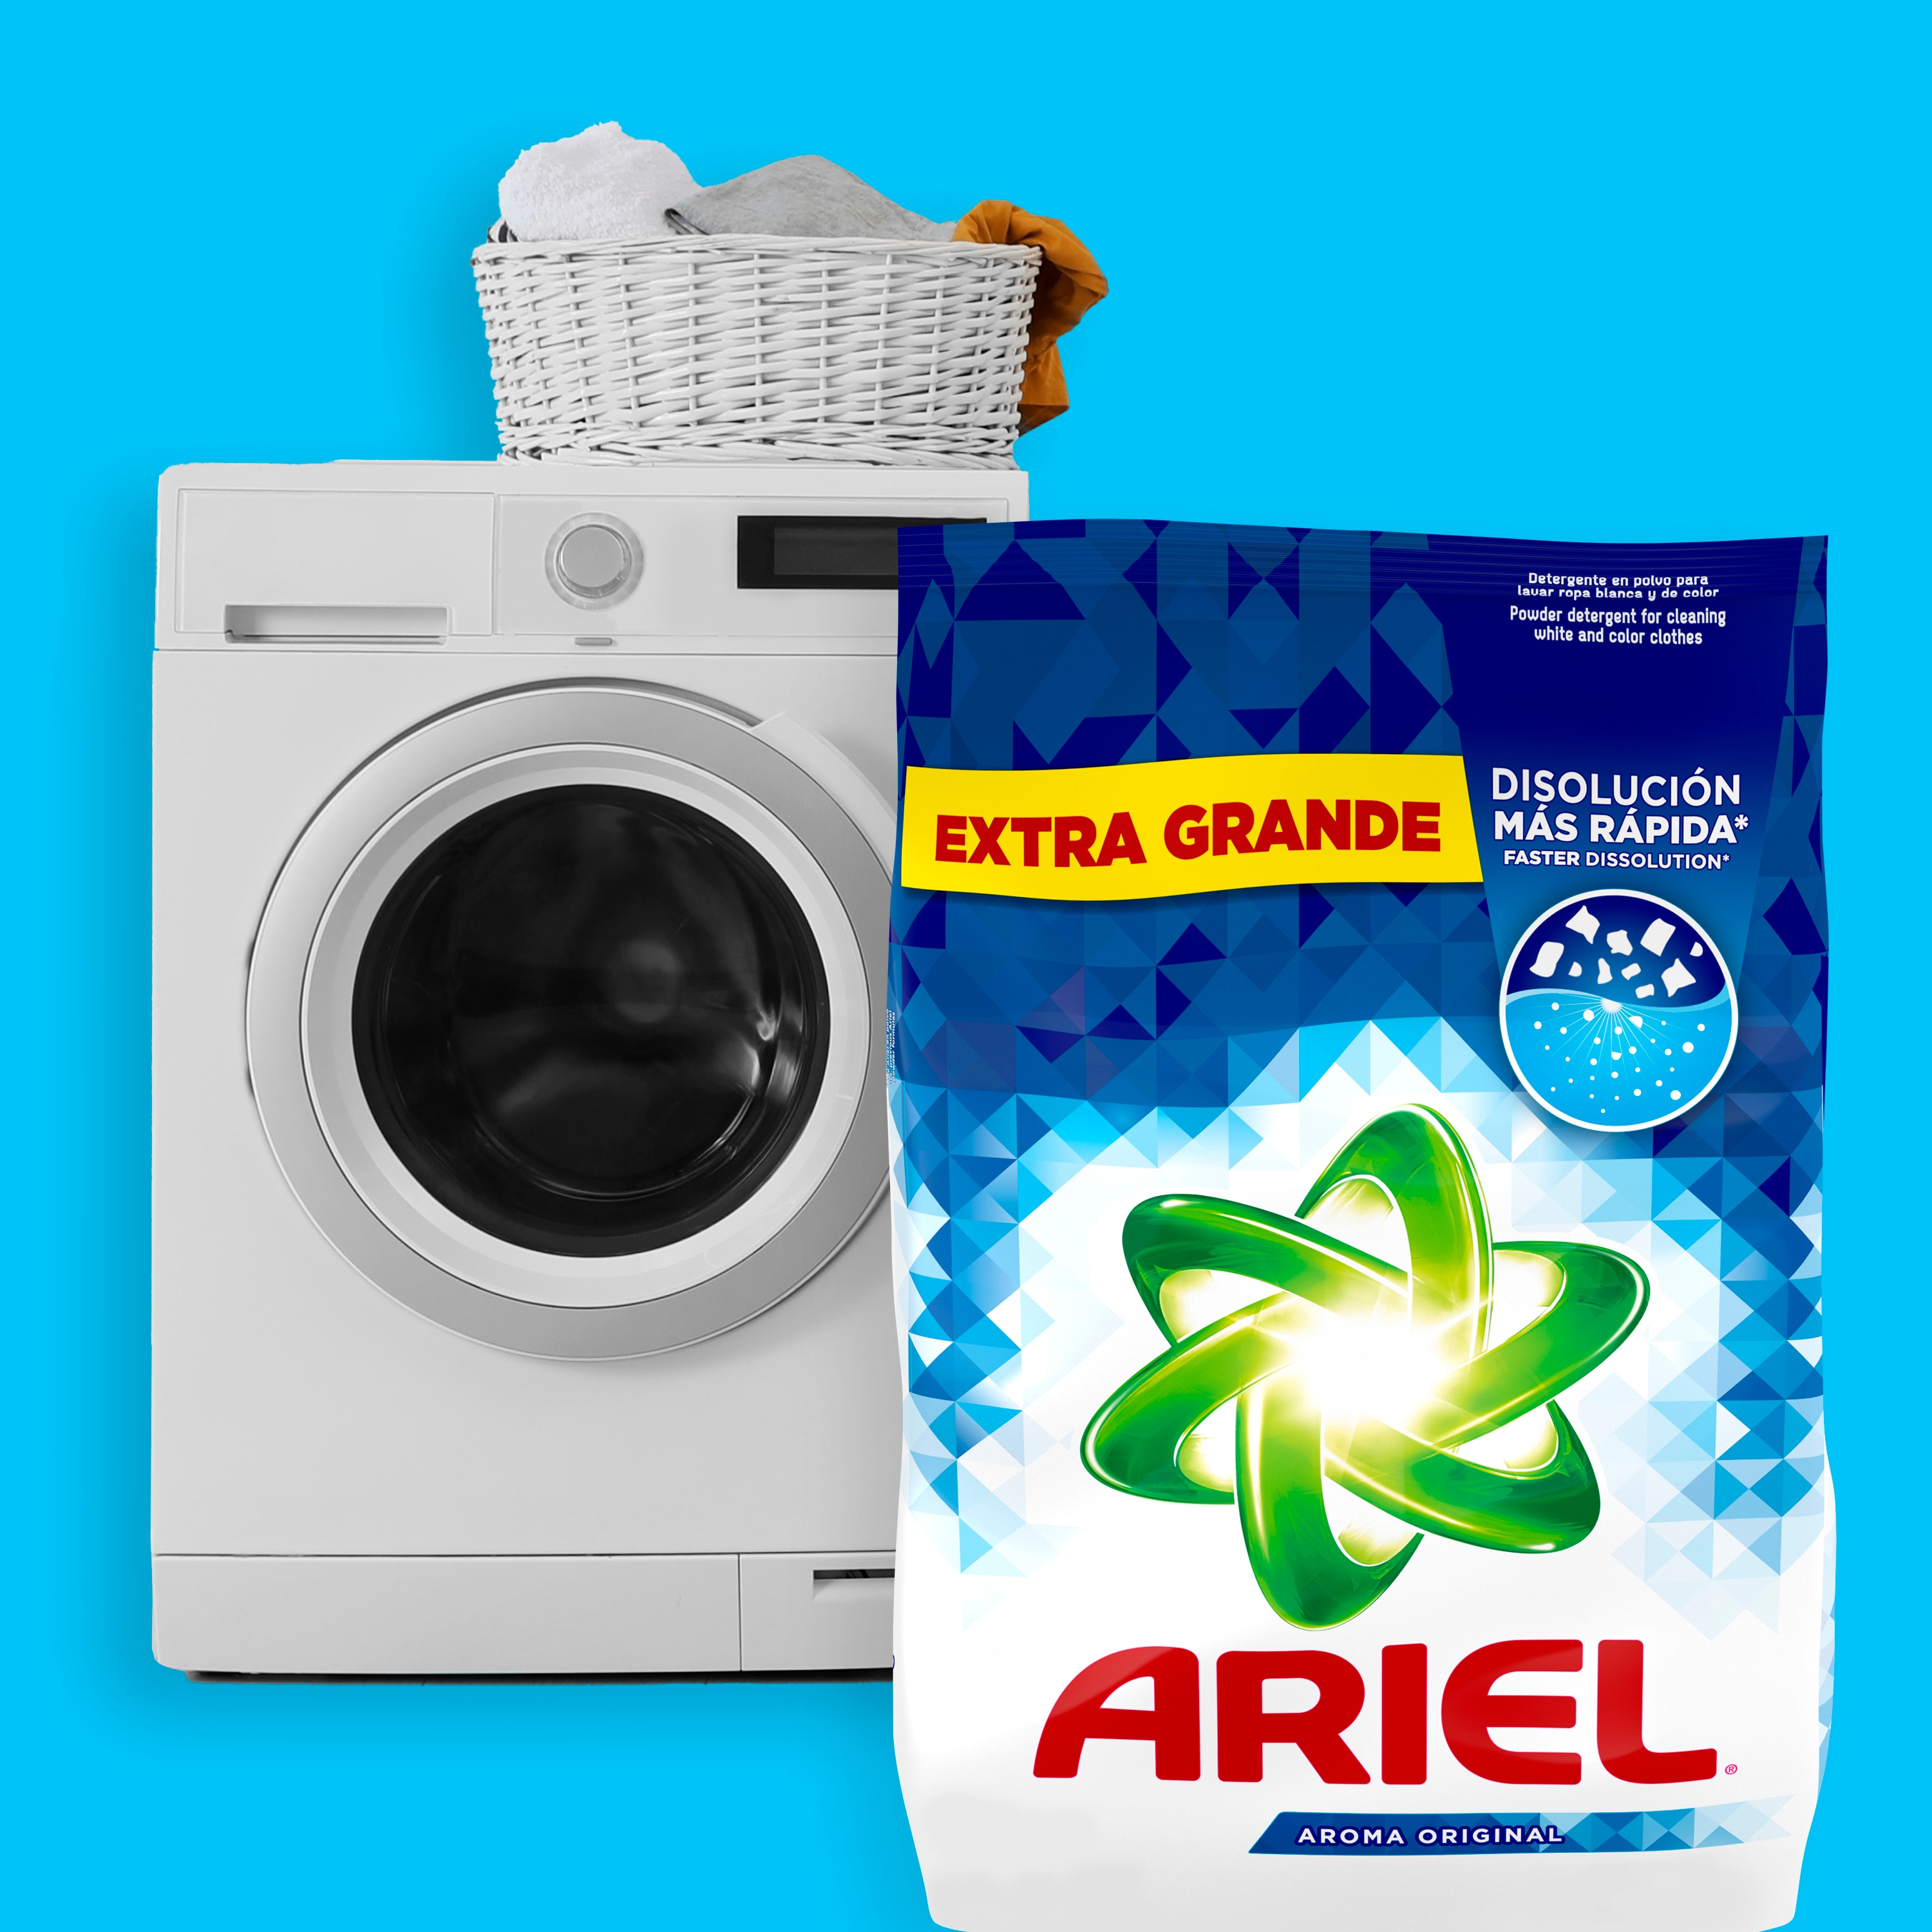 Ariel - Automatic Laundry Original Scent Capsules Pack of 6